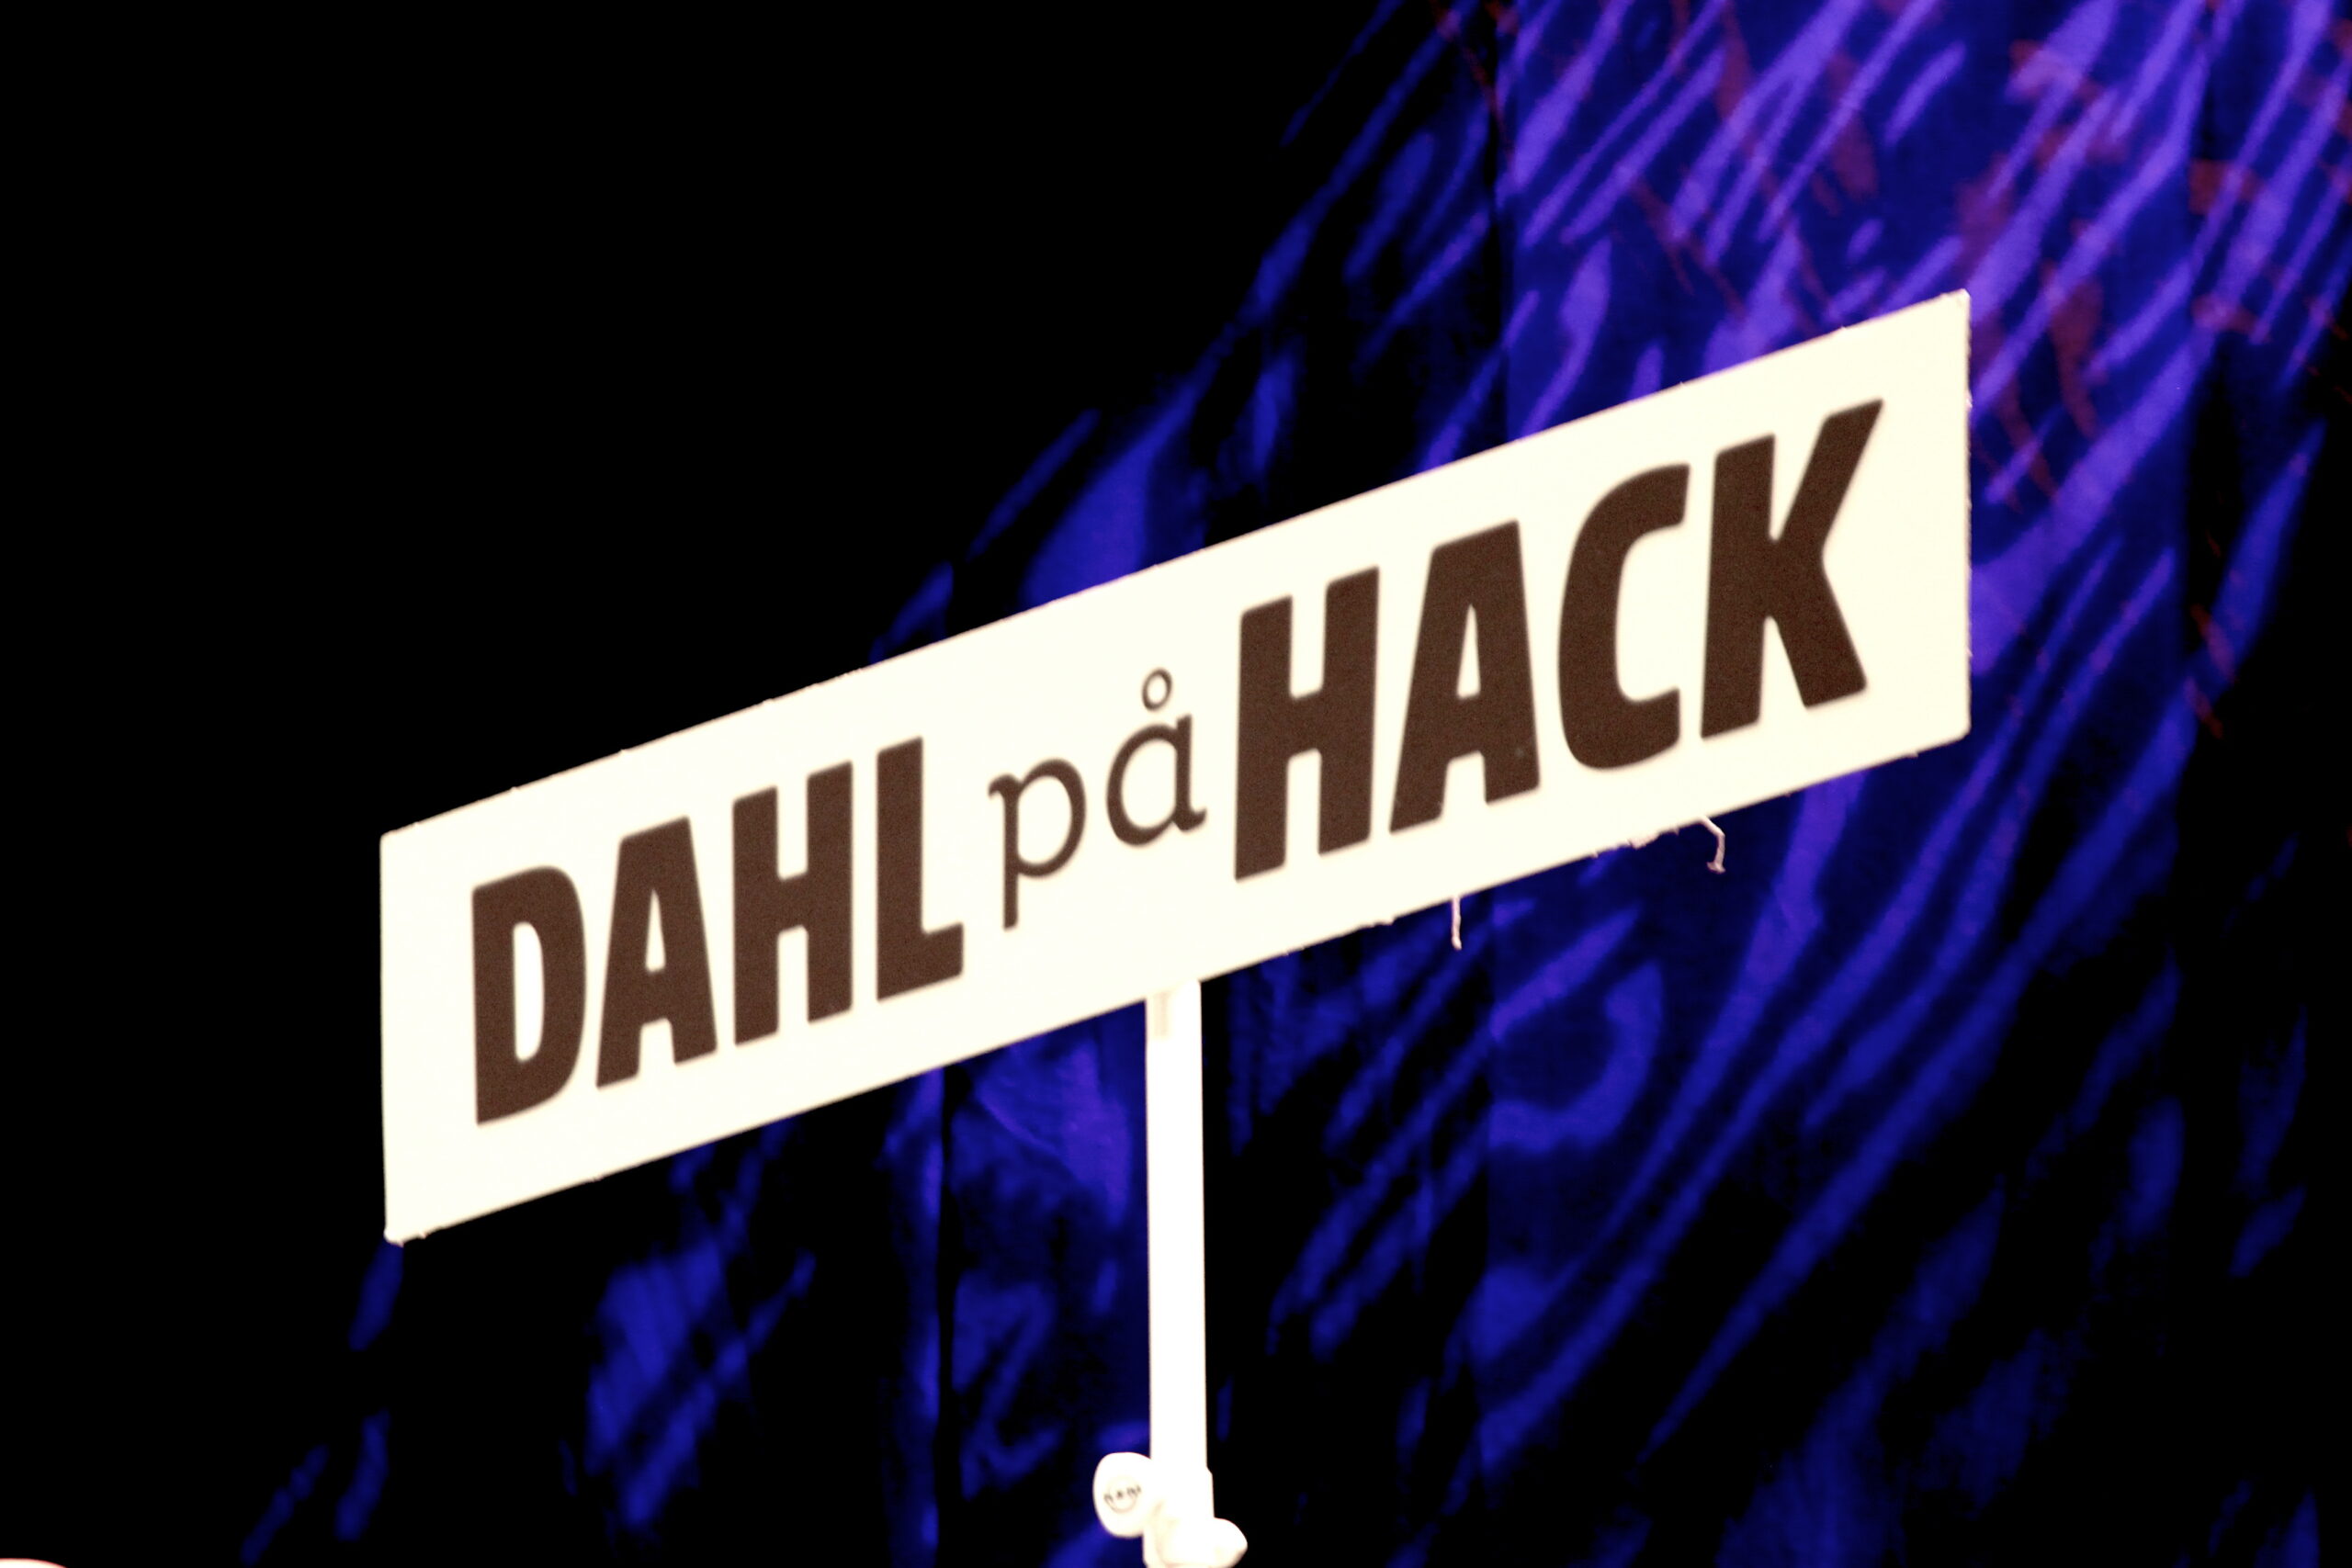 DAHL på HACK logo